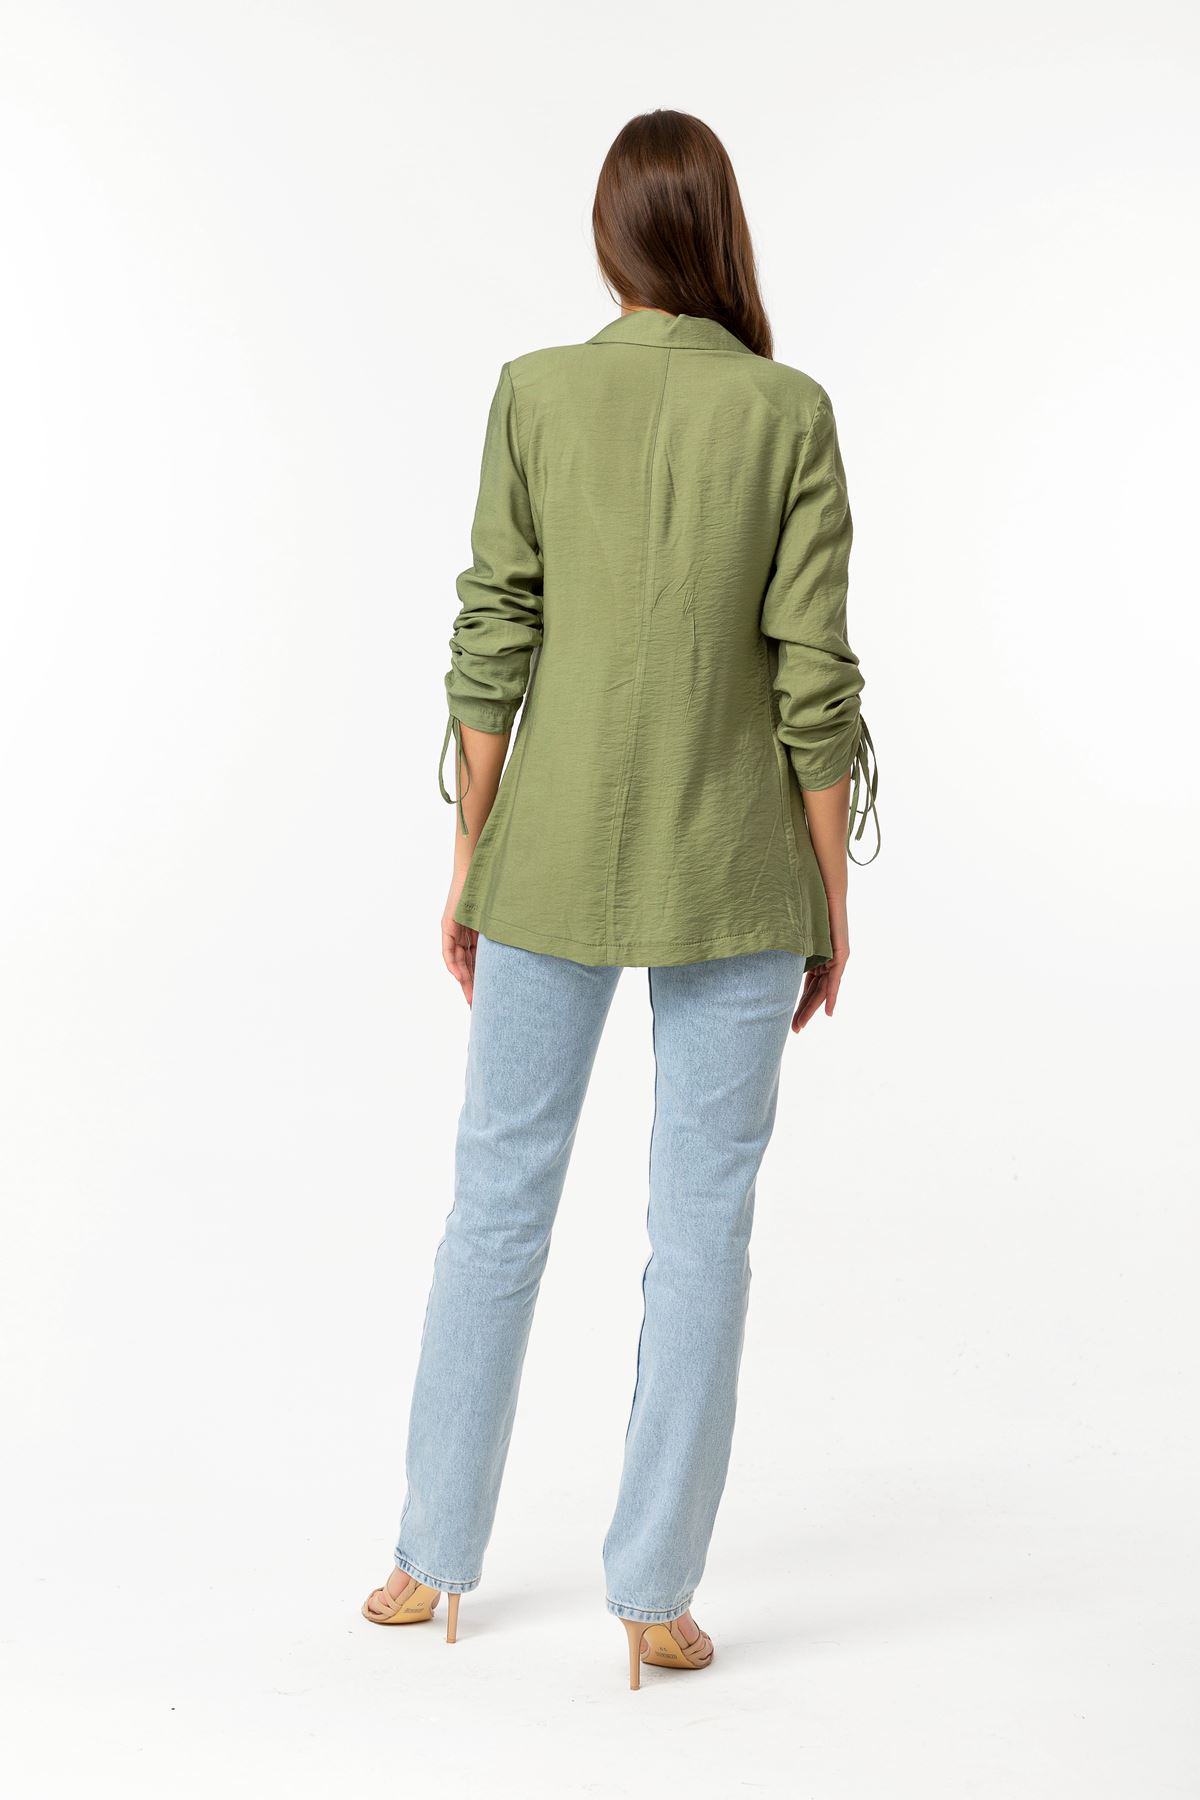 Aerobin Fabric Revere Collar Hip Height Comfy Women Jacket - Khaki 